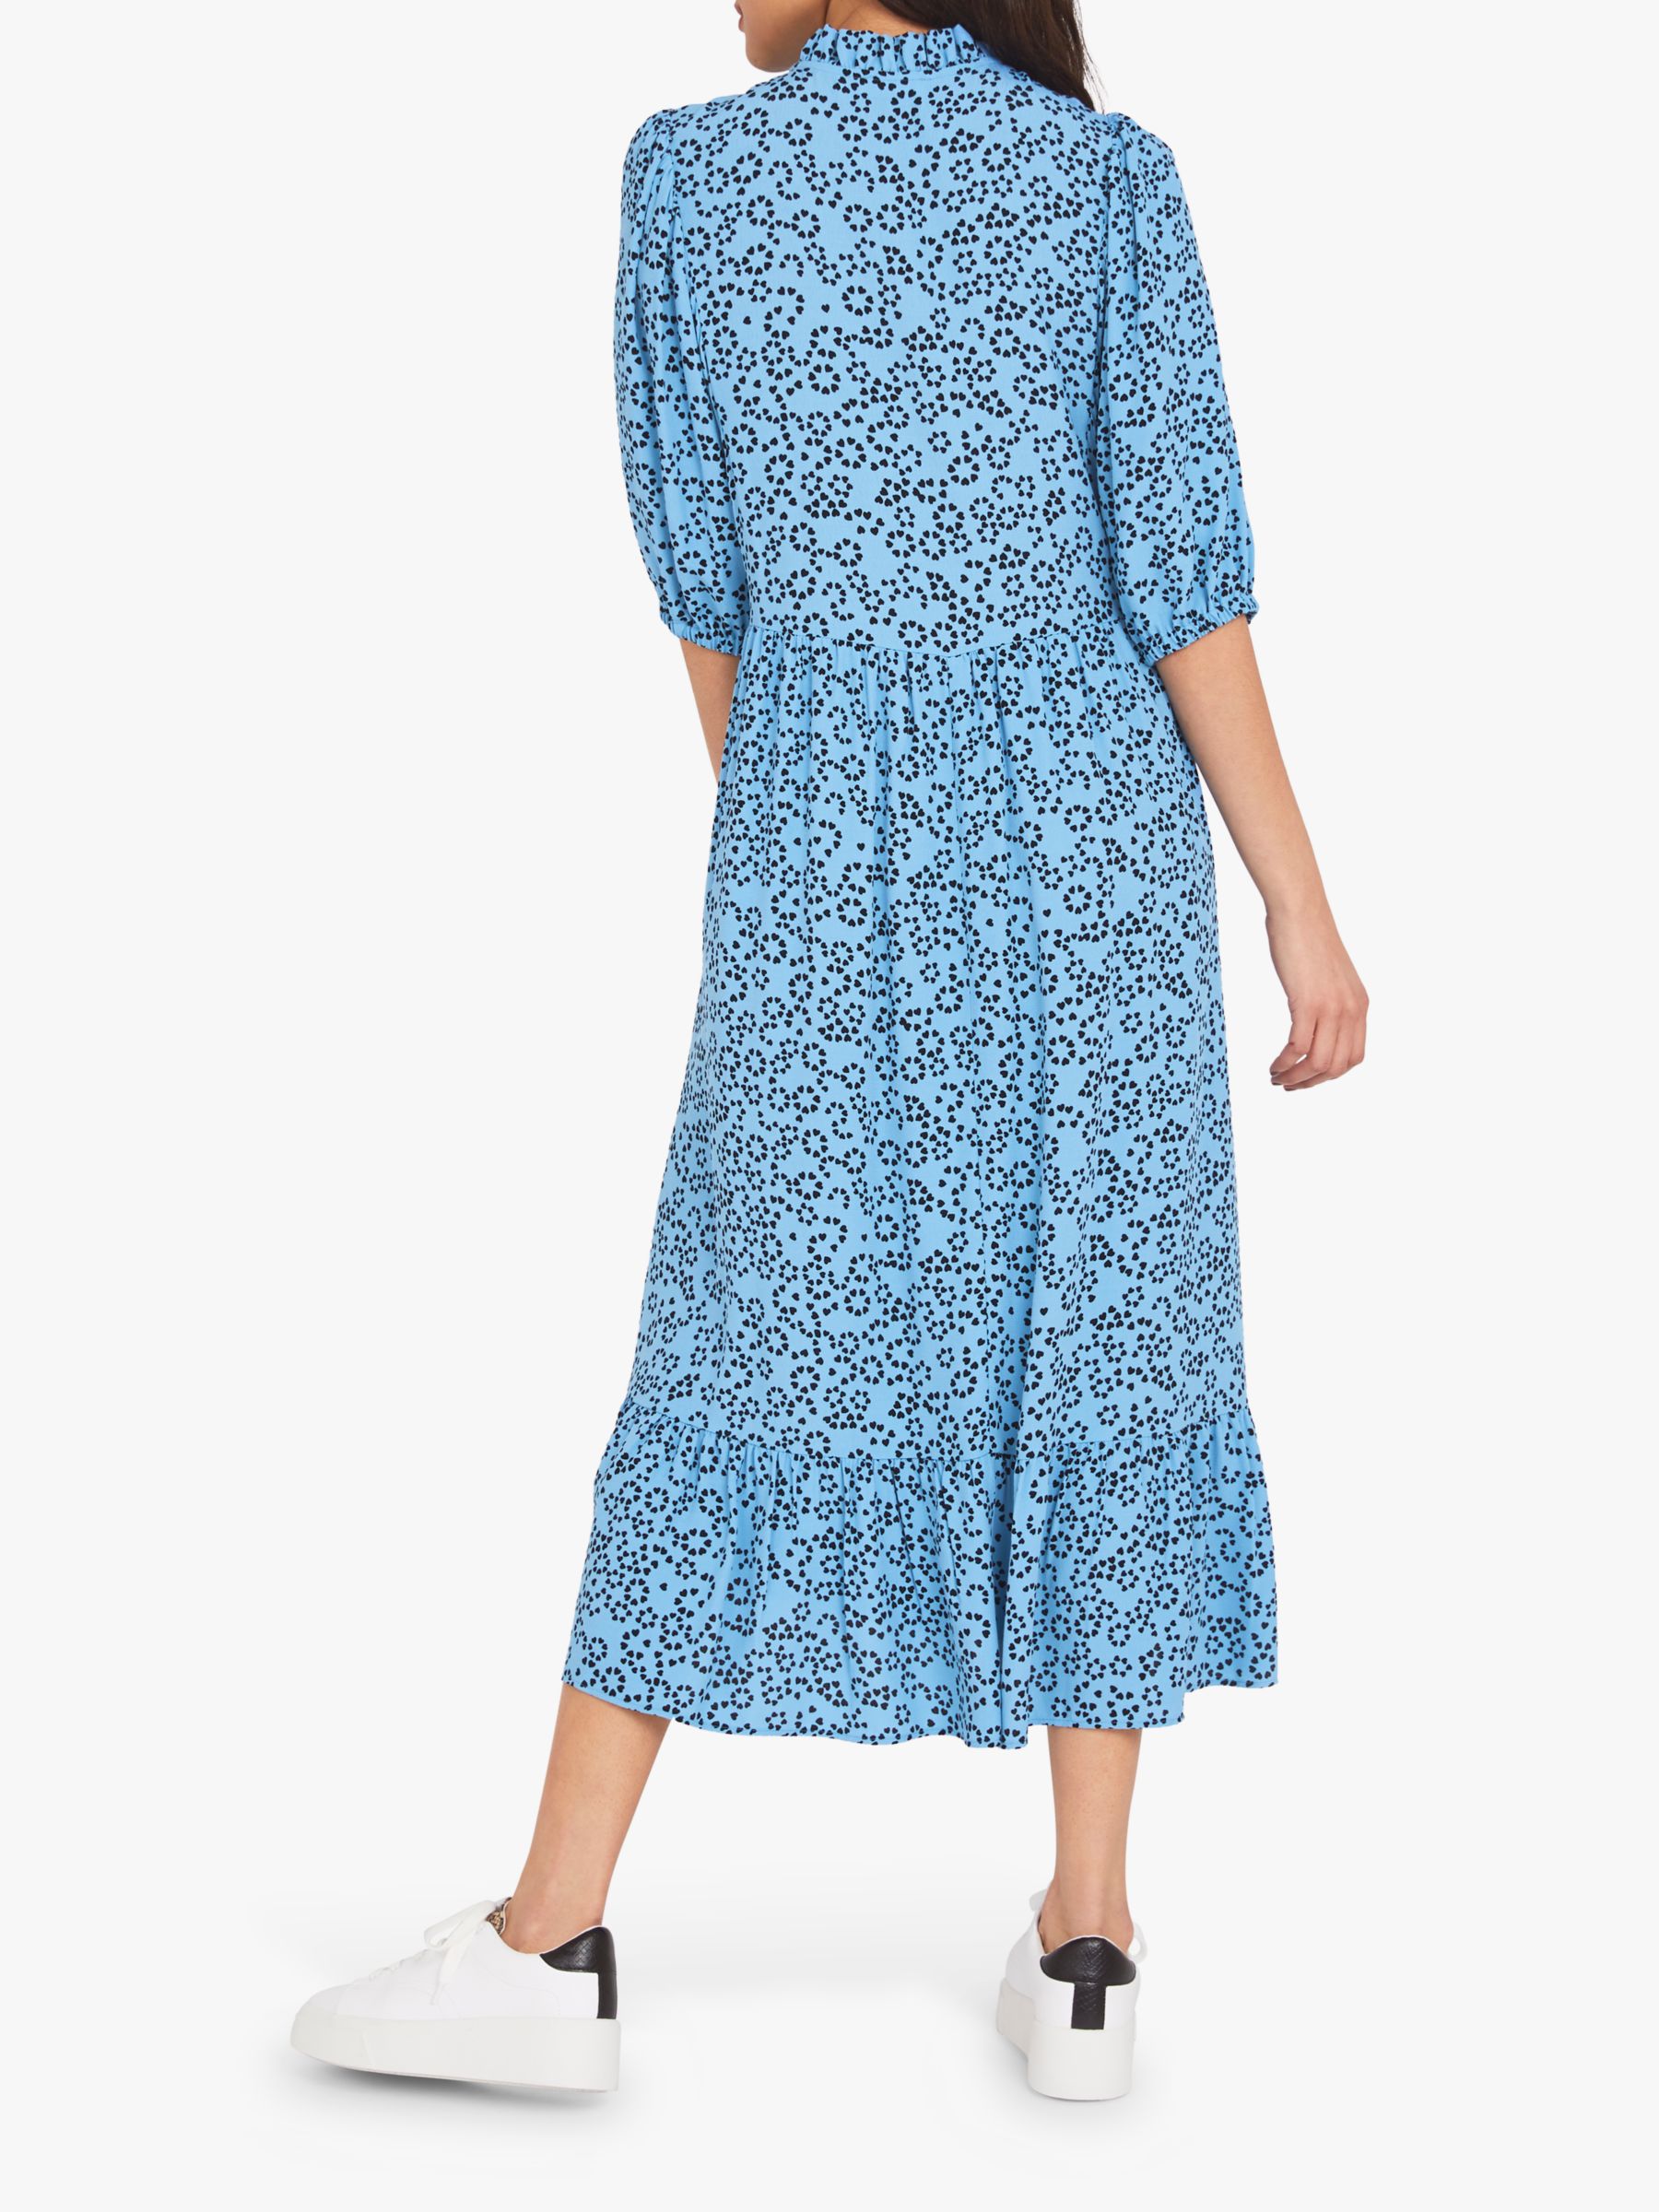 Finery Kyra Crepe Ruffle Neck Midi Dress, Blue/Circle Hearts, 8